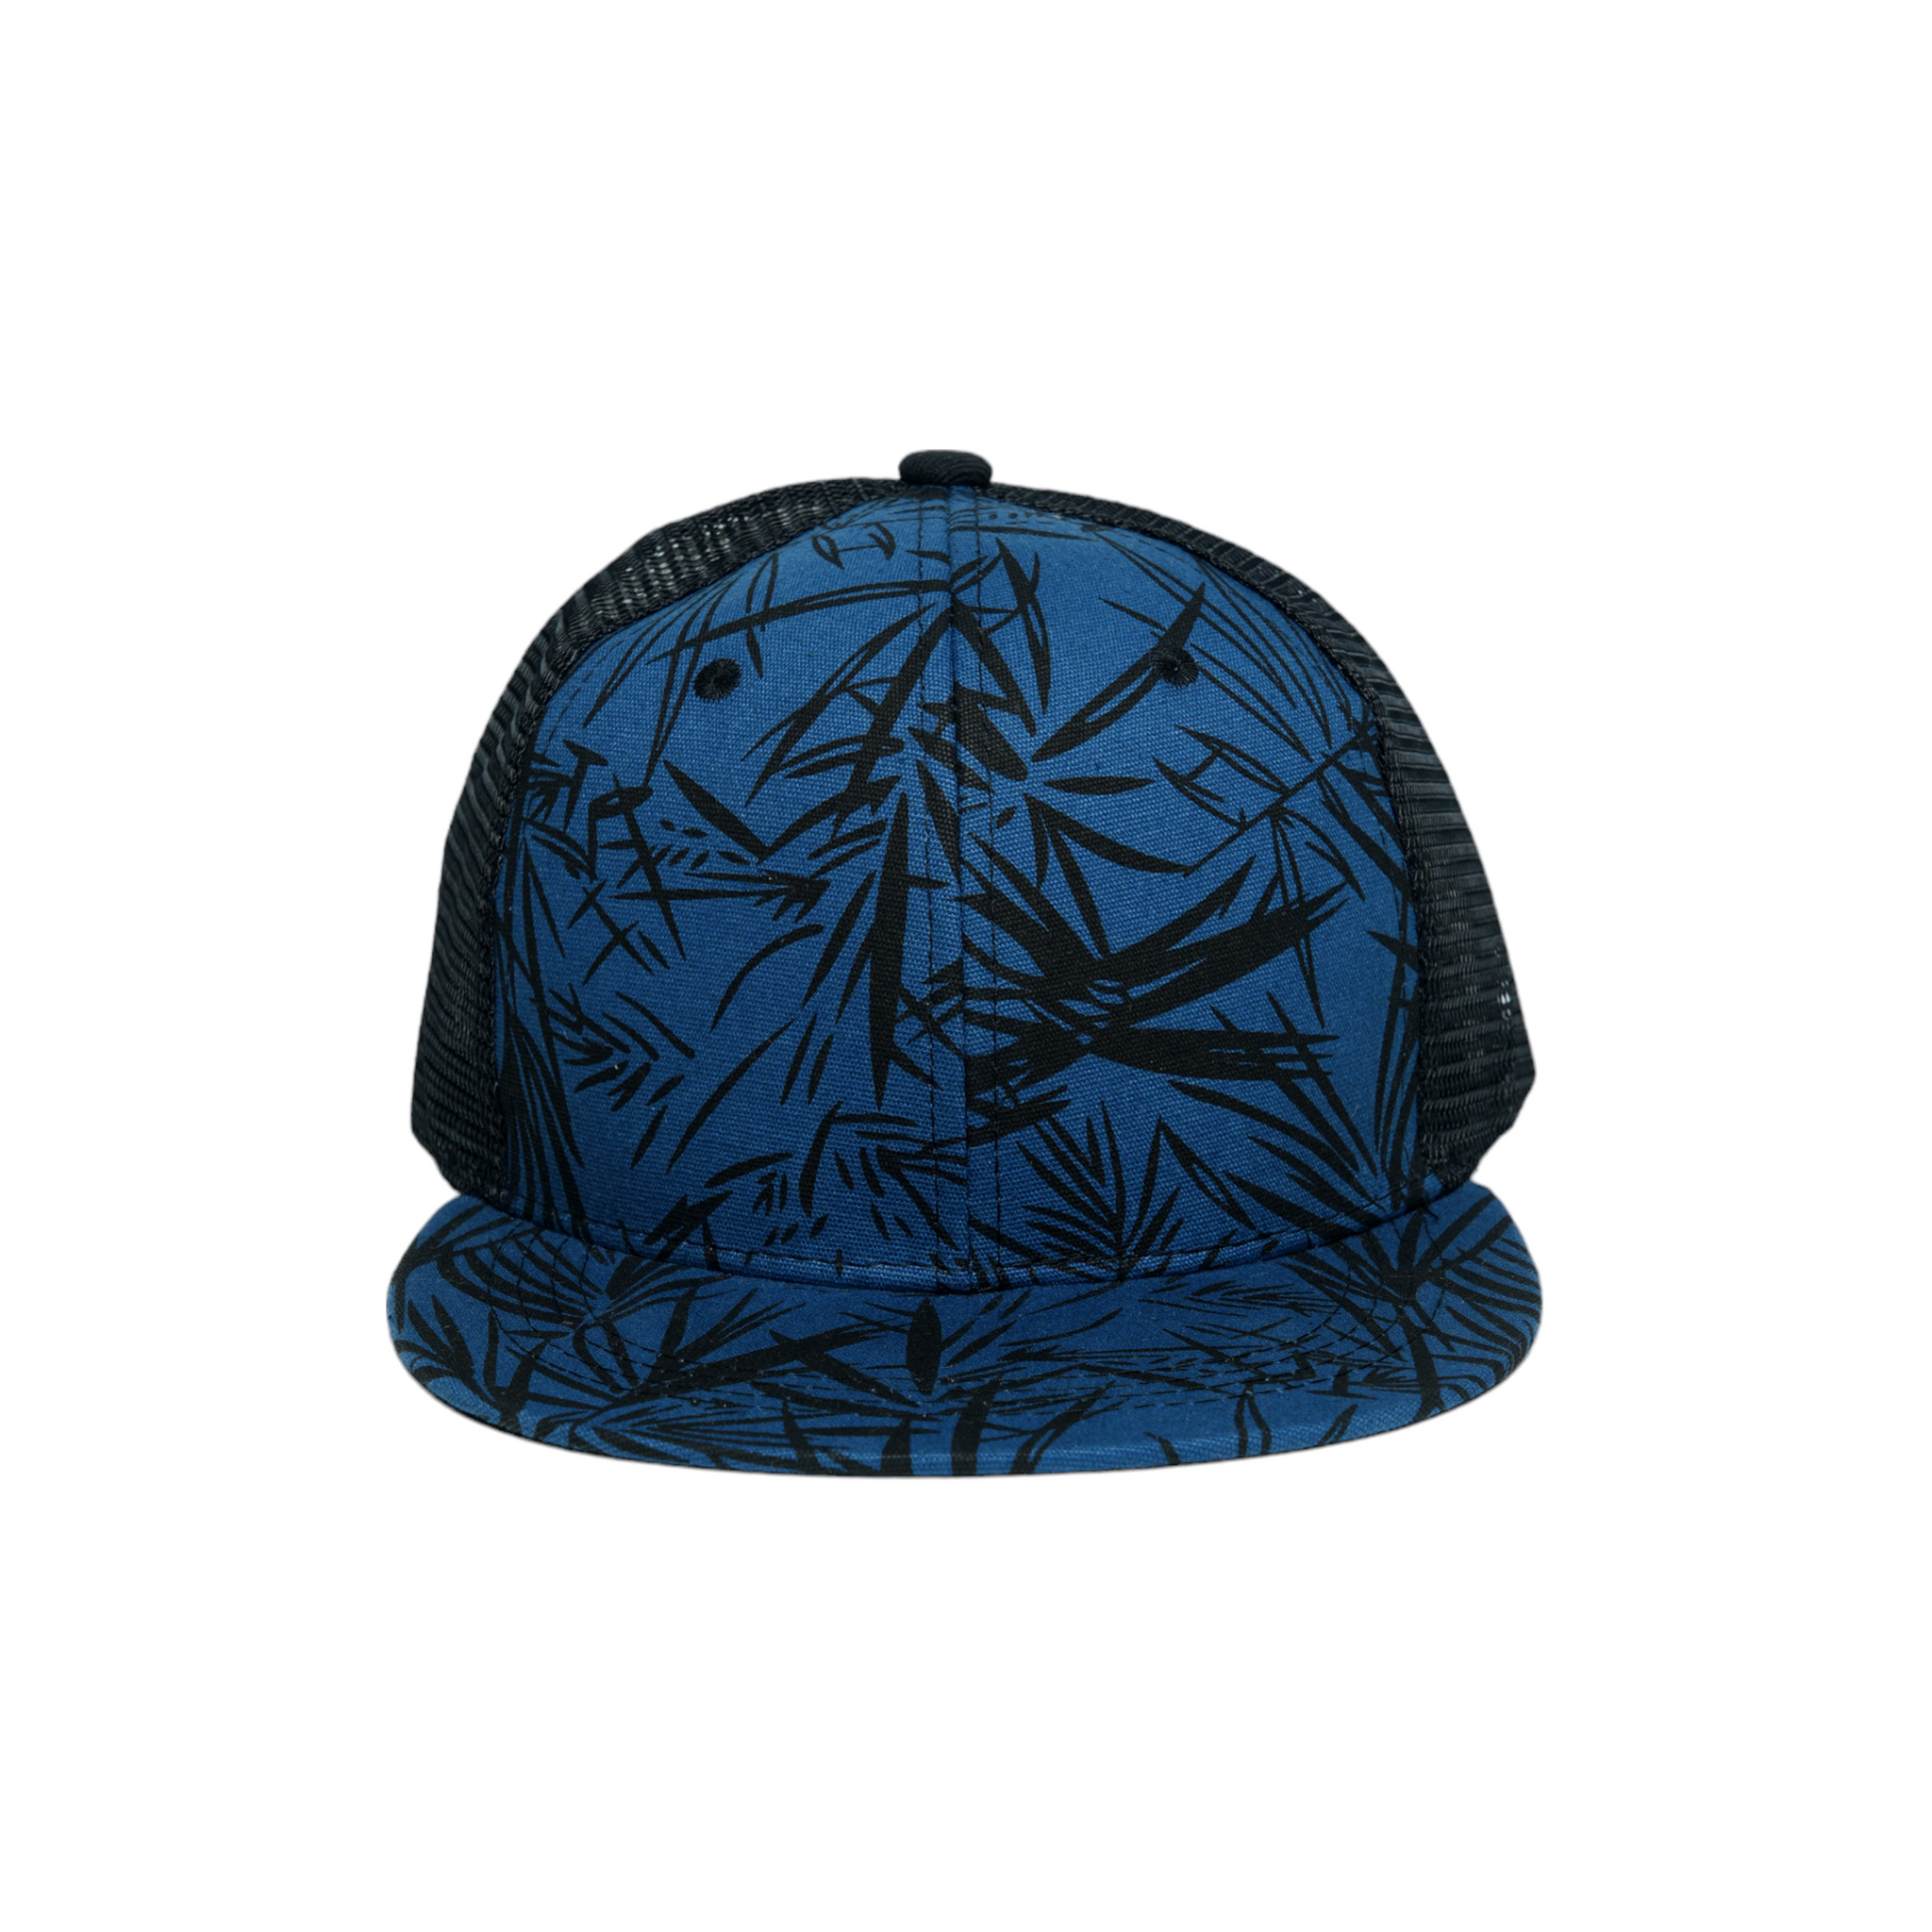 Chokore Printed Flat Brim Baseball Cap with Mesh Detailing (Blue)